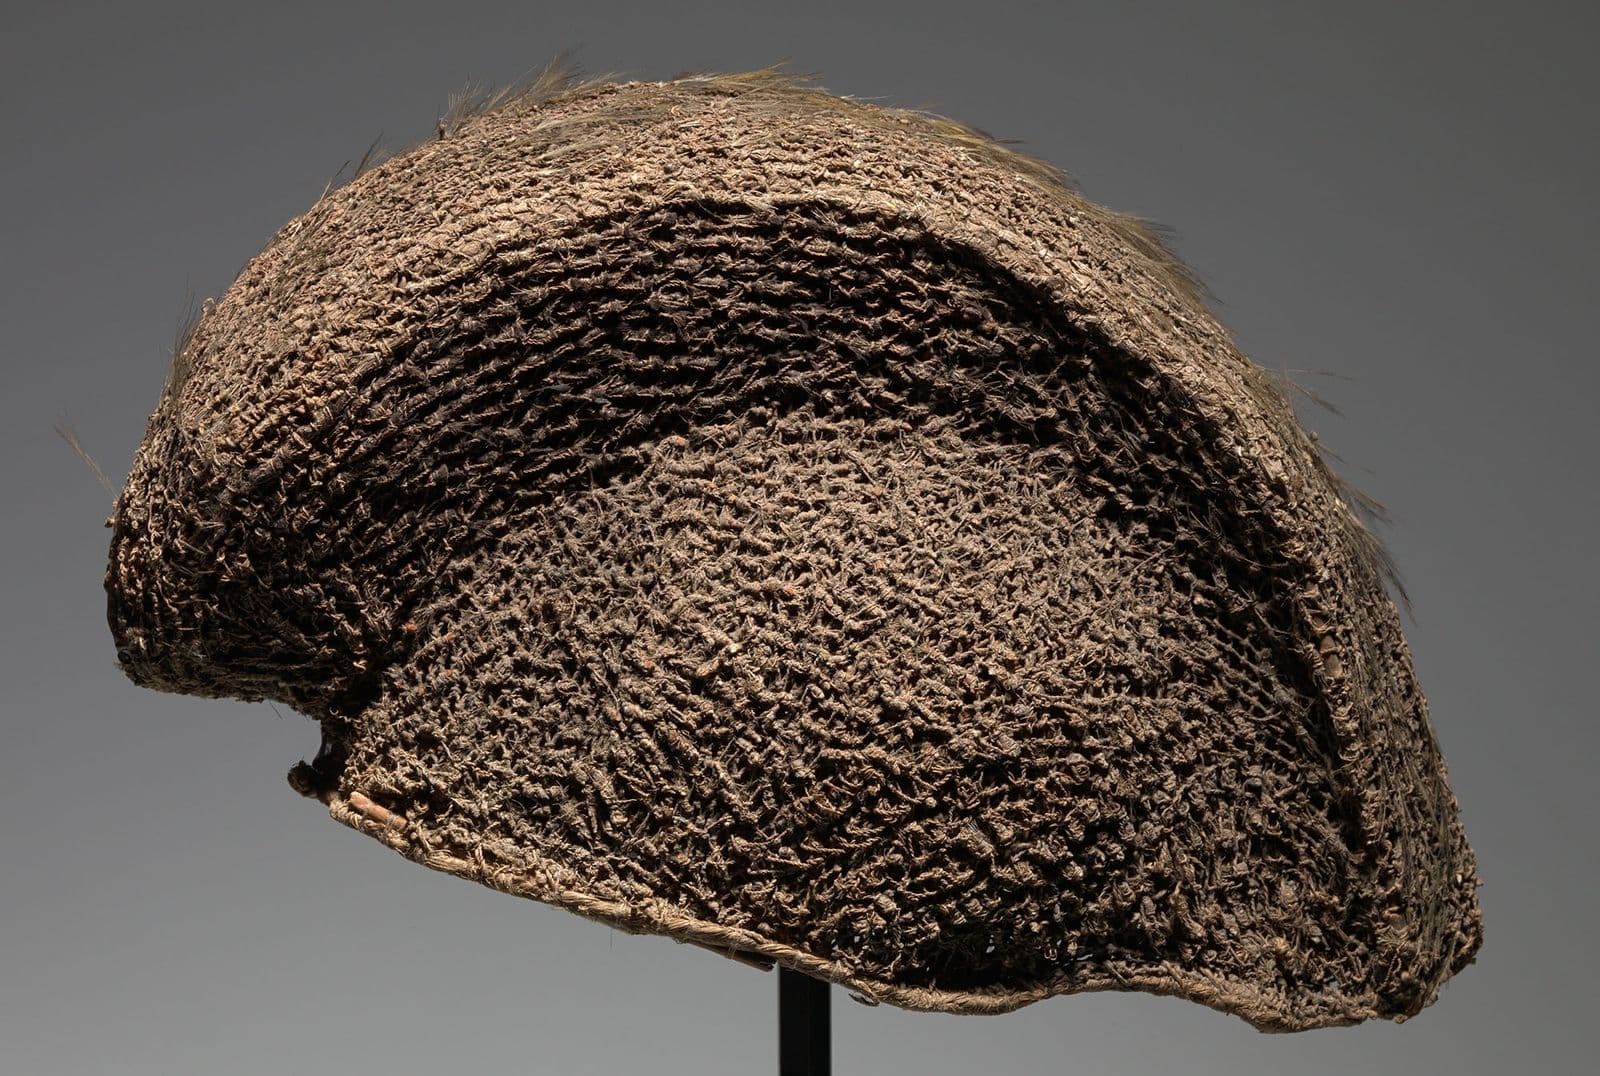 A brown textured helmet